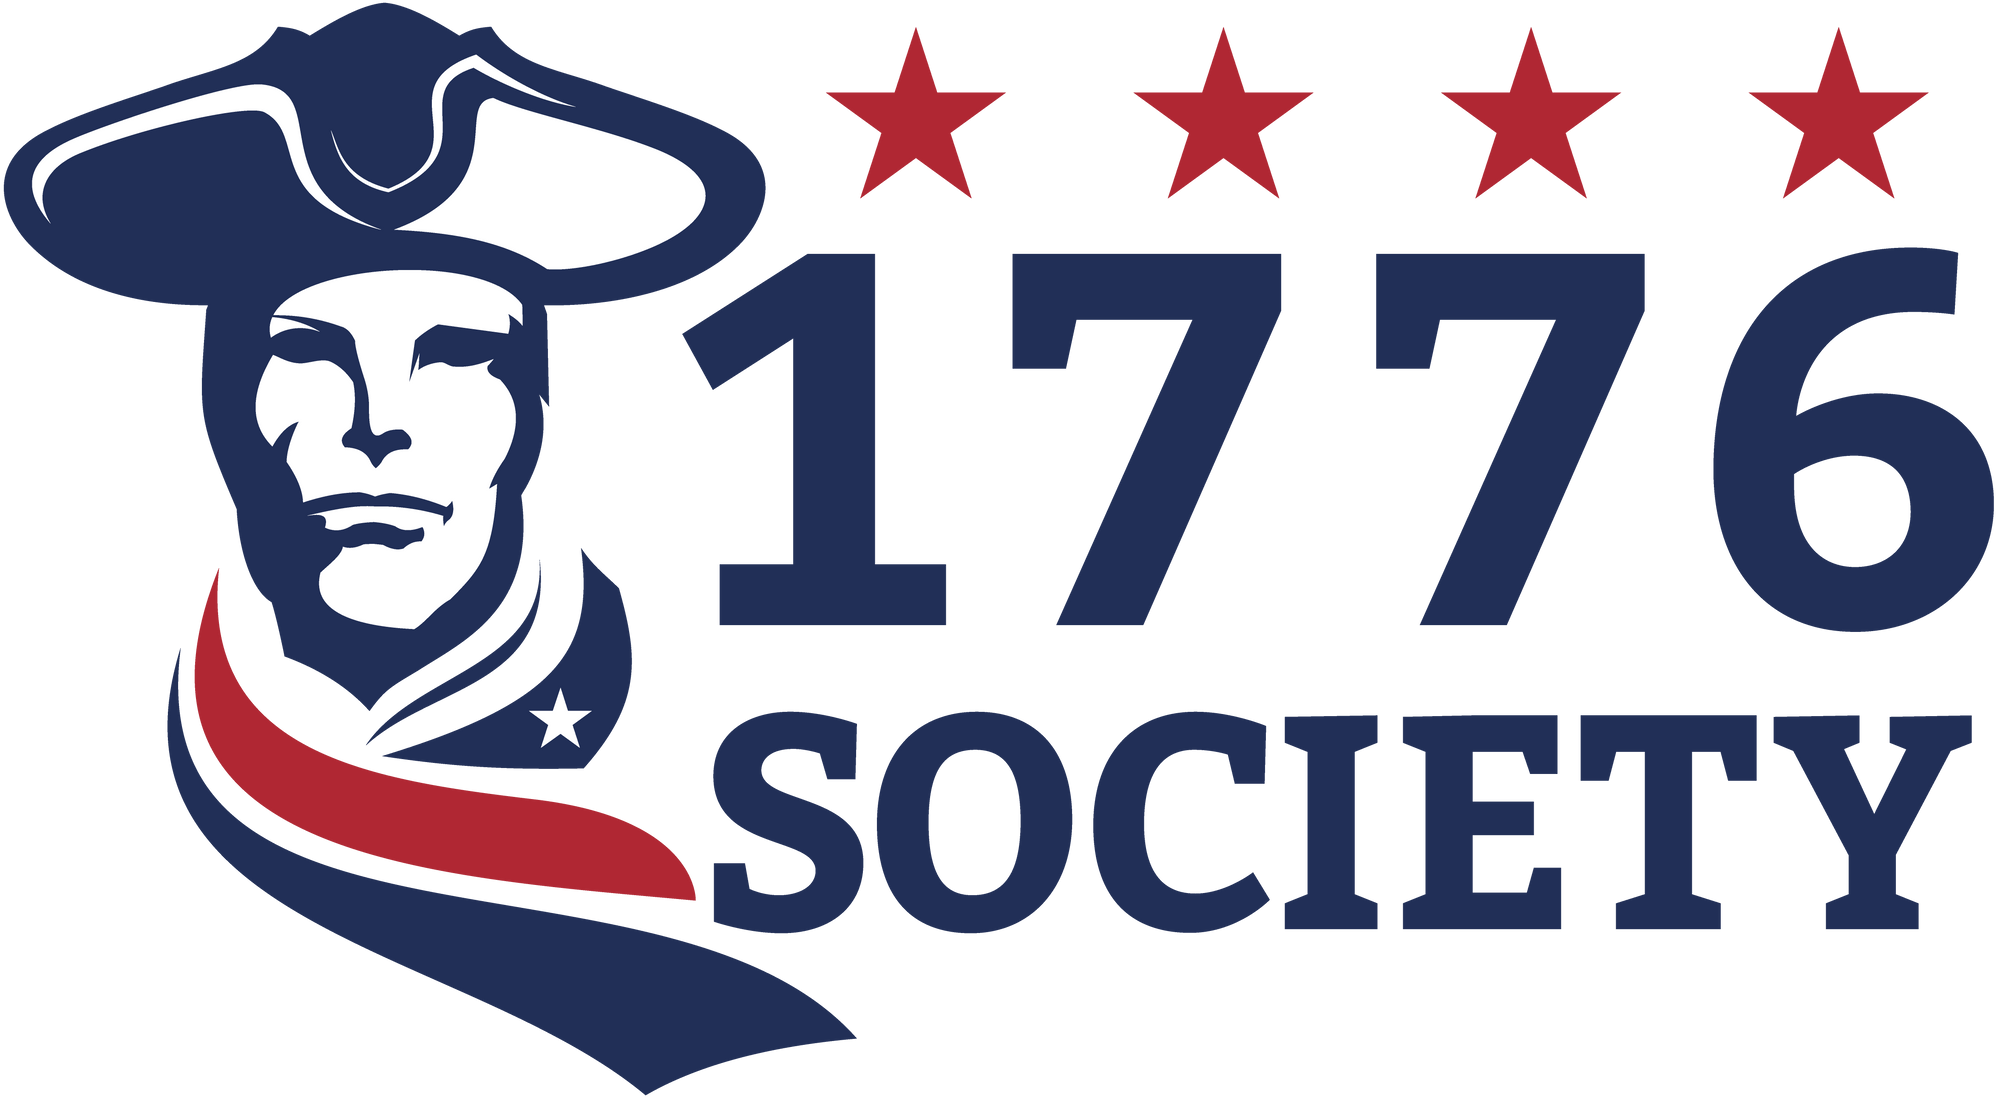 1776 Society (14 Day Trial)